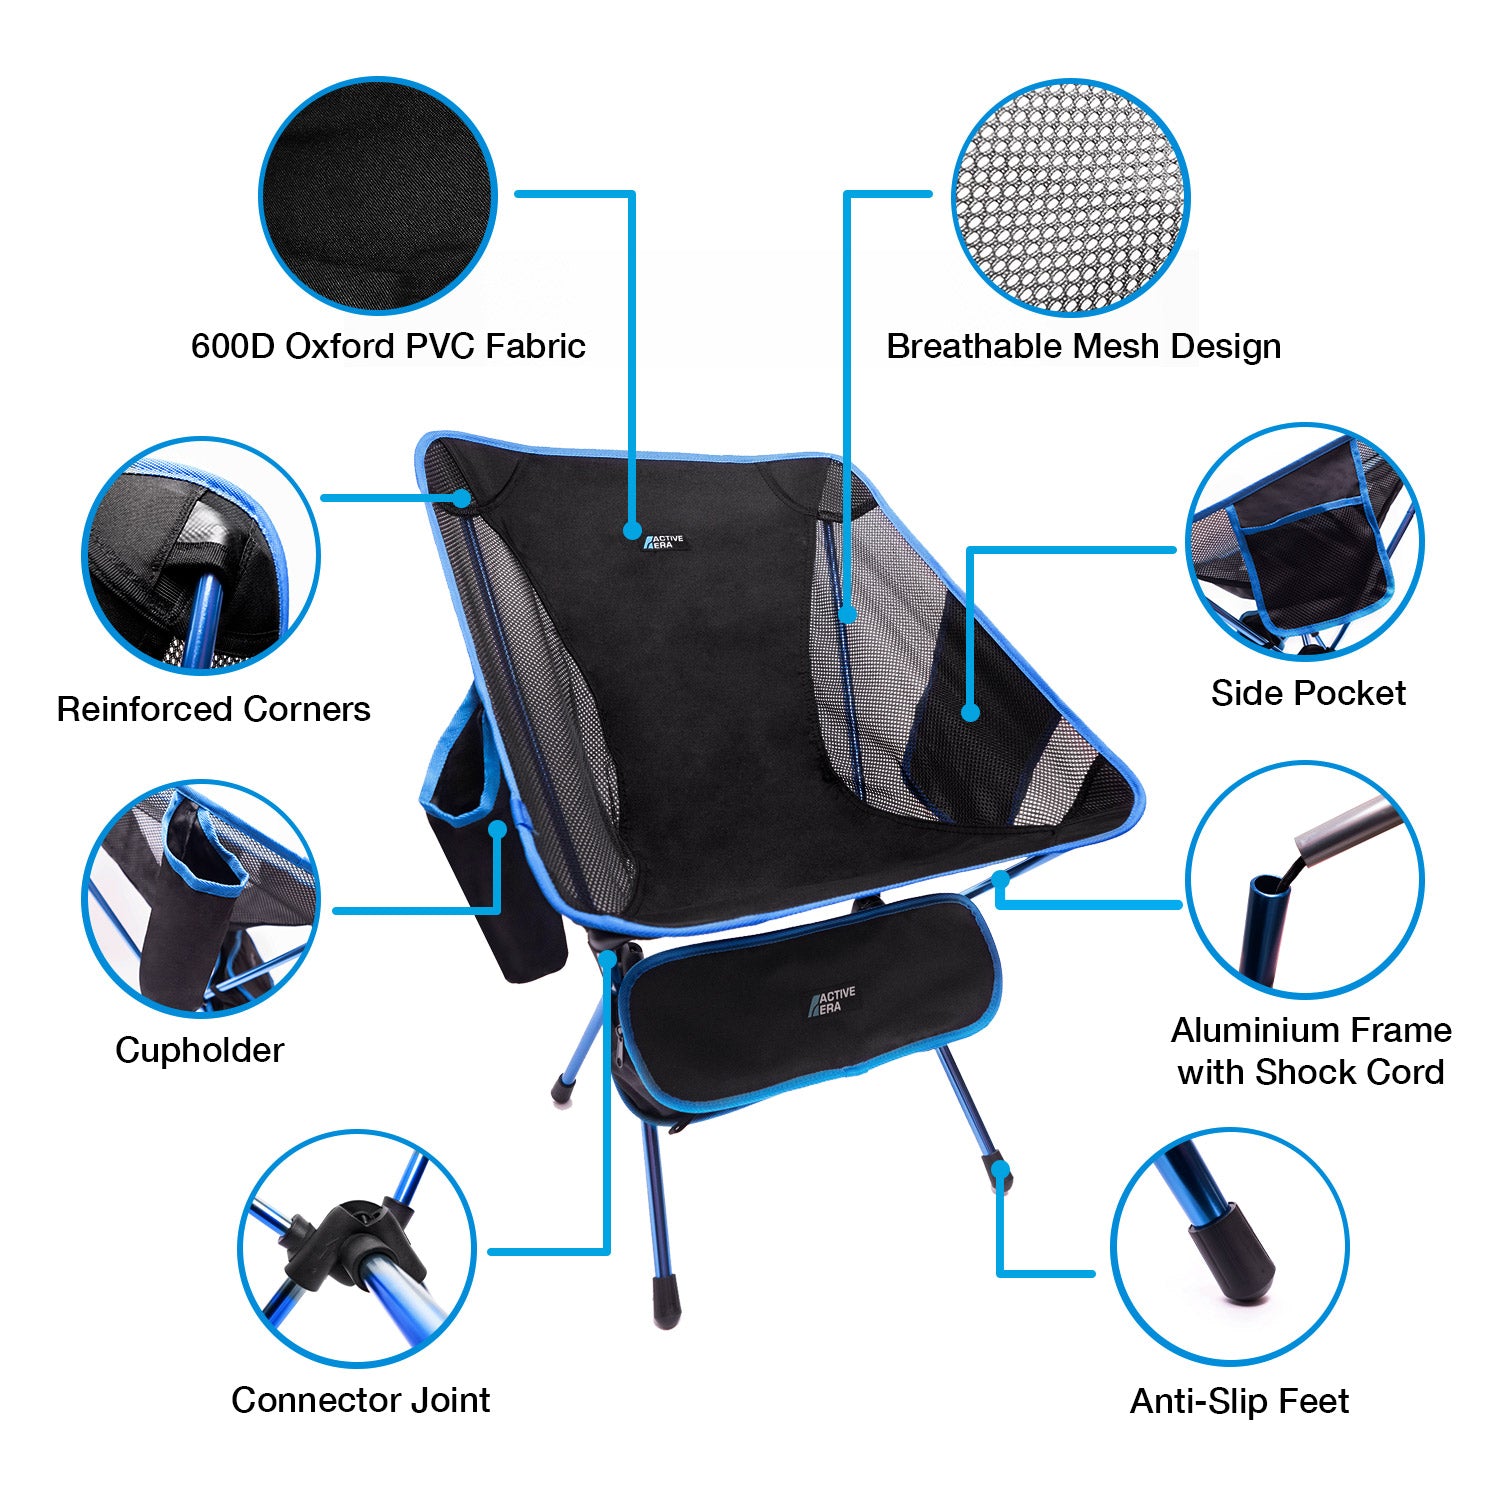 Premium Camping Chair - Ultra Lightweight, Compact Folding Chair